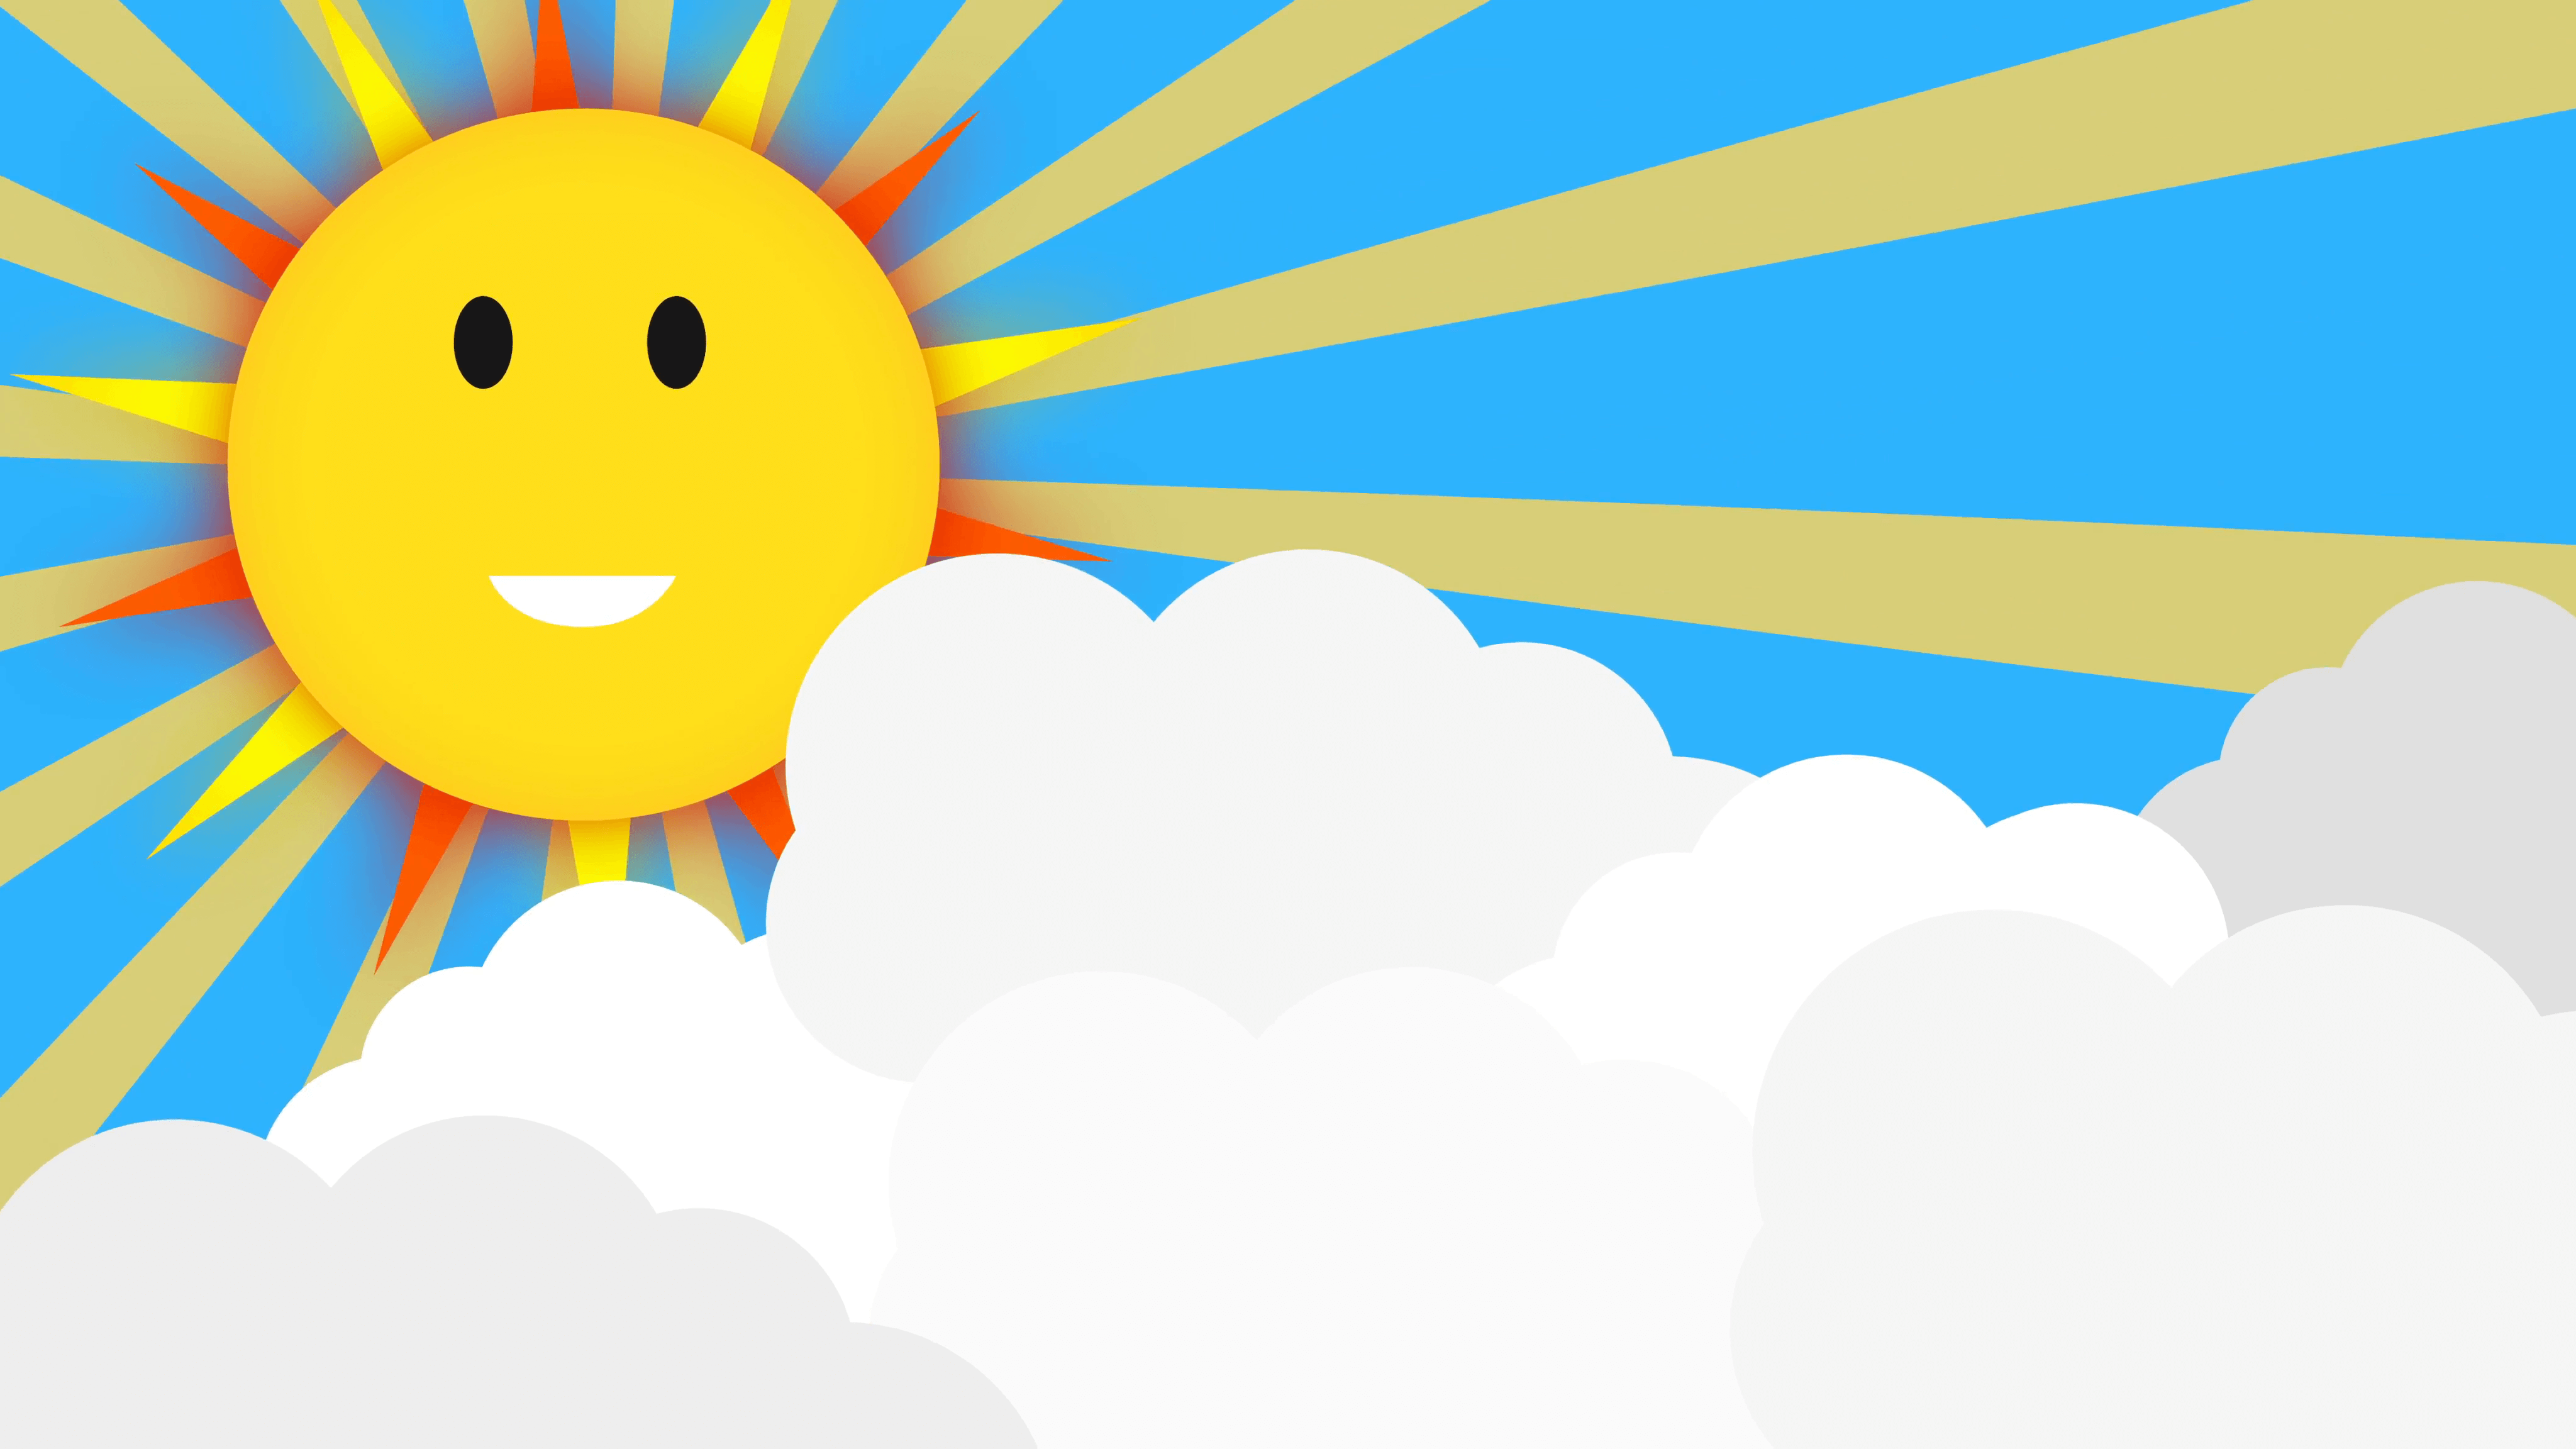 cartoon sun and clouds in sky seamless loop, cute smiling sun vs